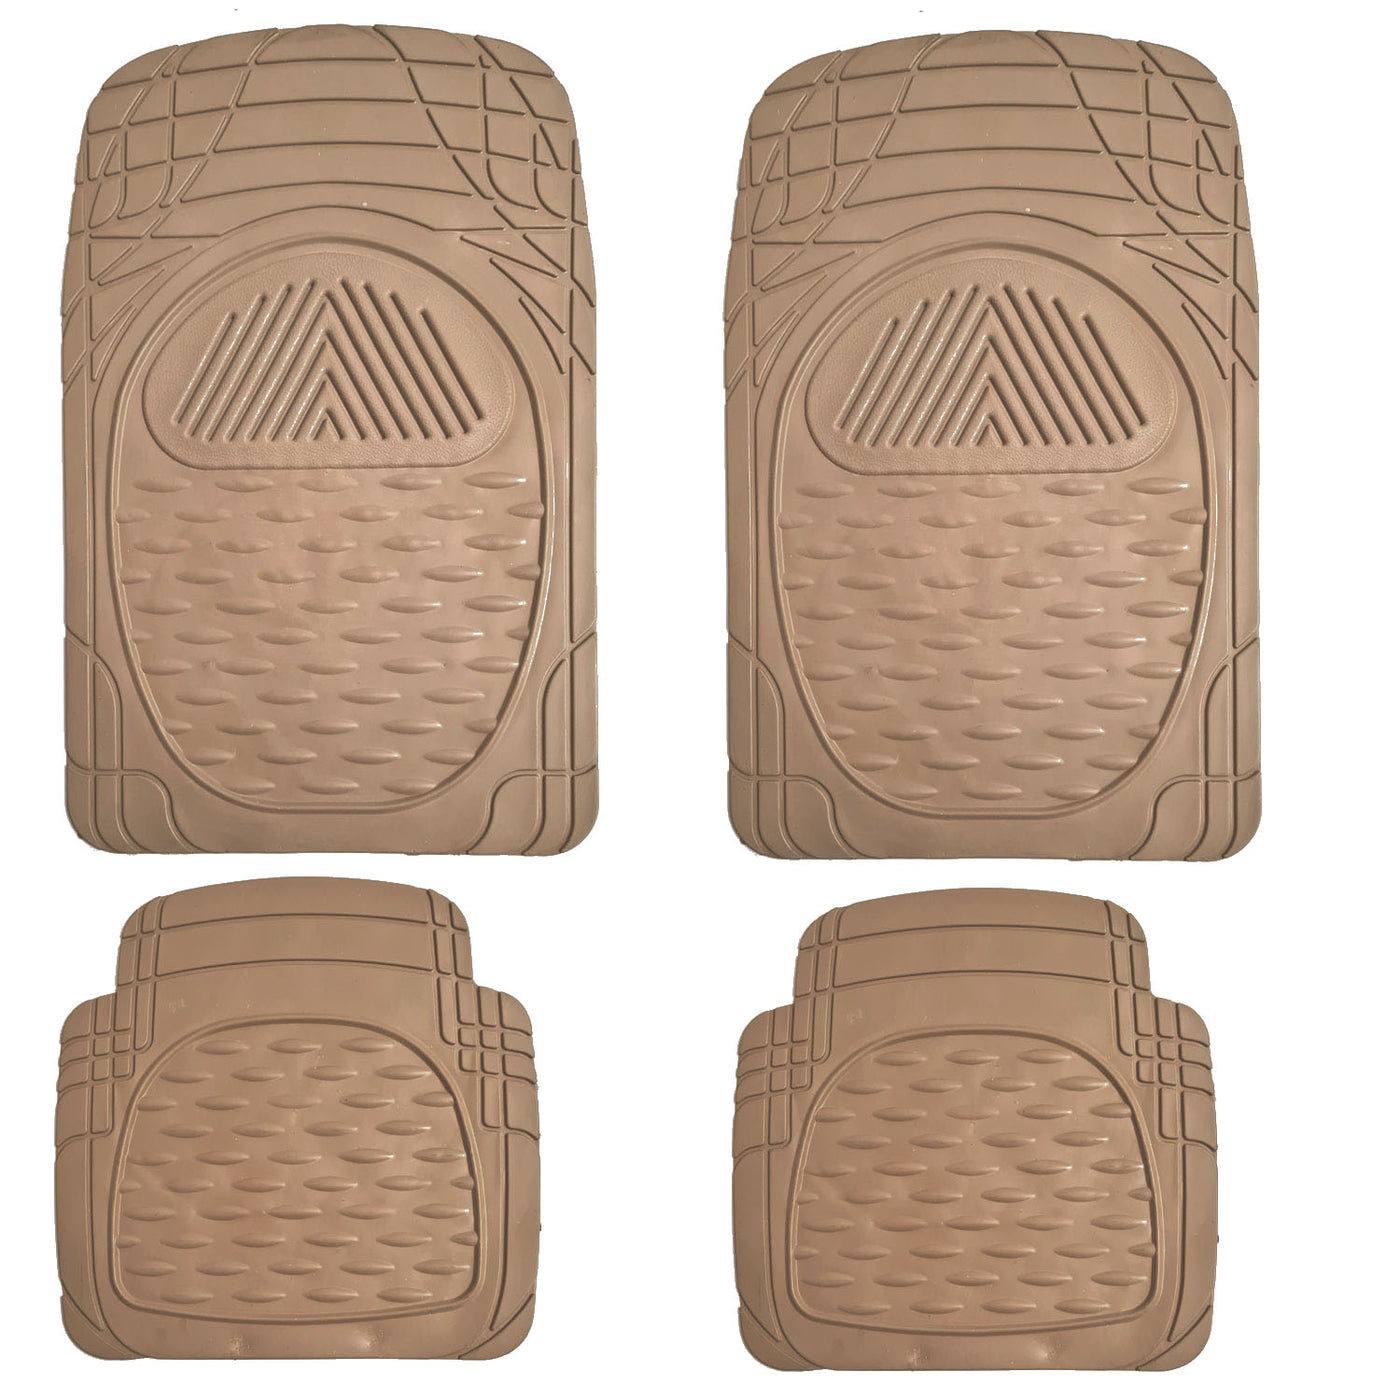 Woscher- 7904 FelxTough All Season Rubber Car Floor Mat with Traction  Grips, Soft & Comfortable Car Foot Mats for Car SUV, Universal Self Cut Car  Accessories, 64.8 x 43.2 x 2.5 cm